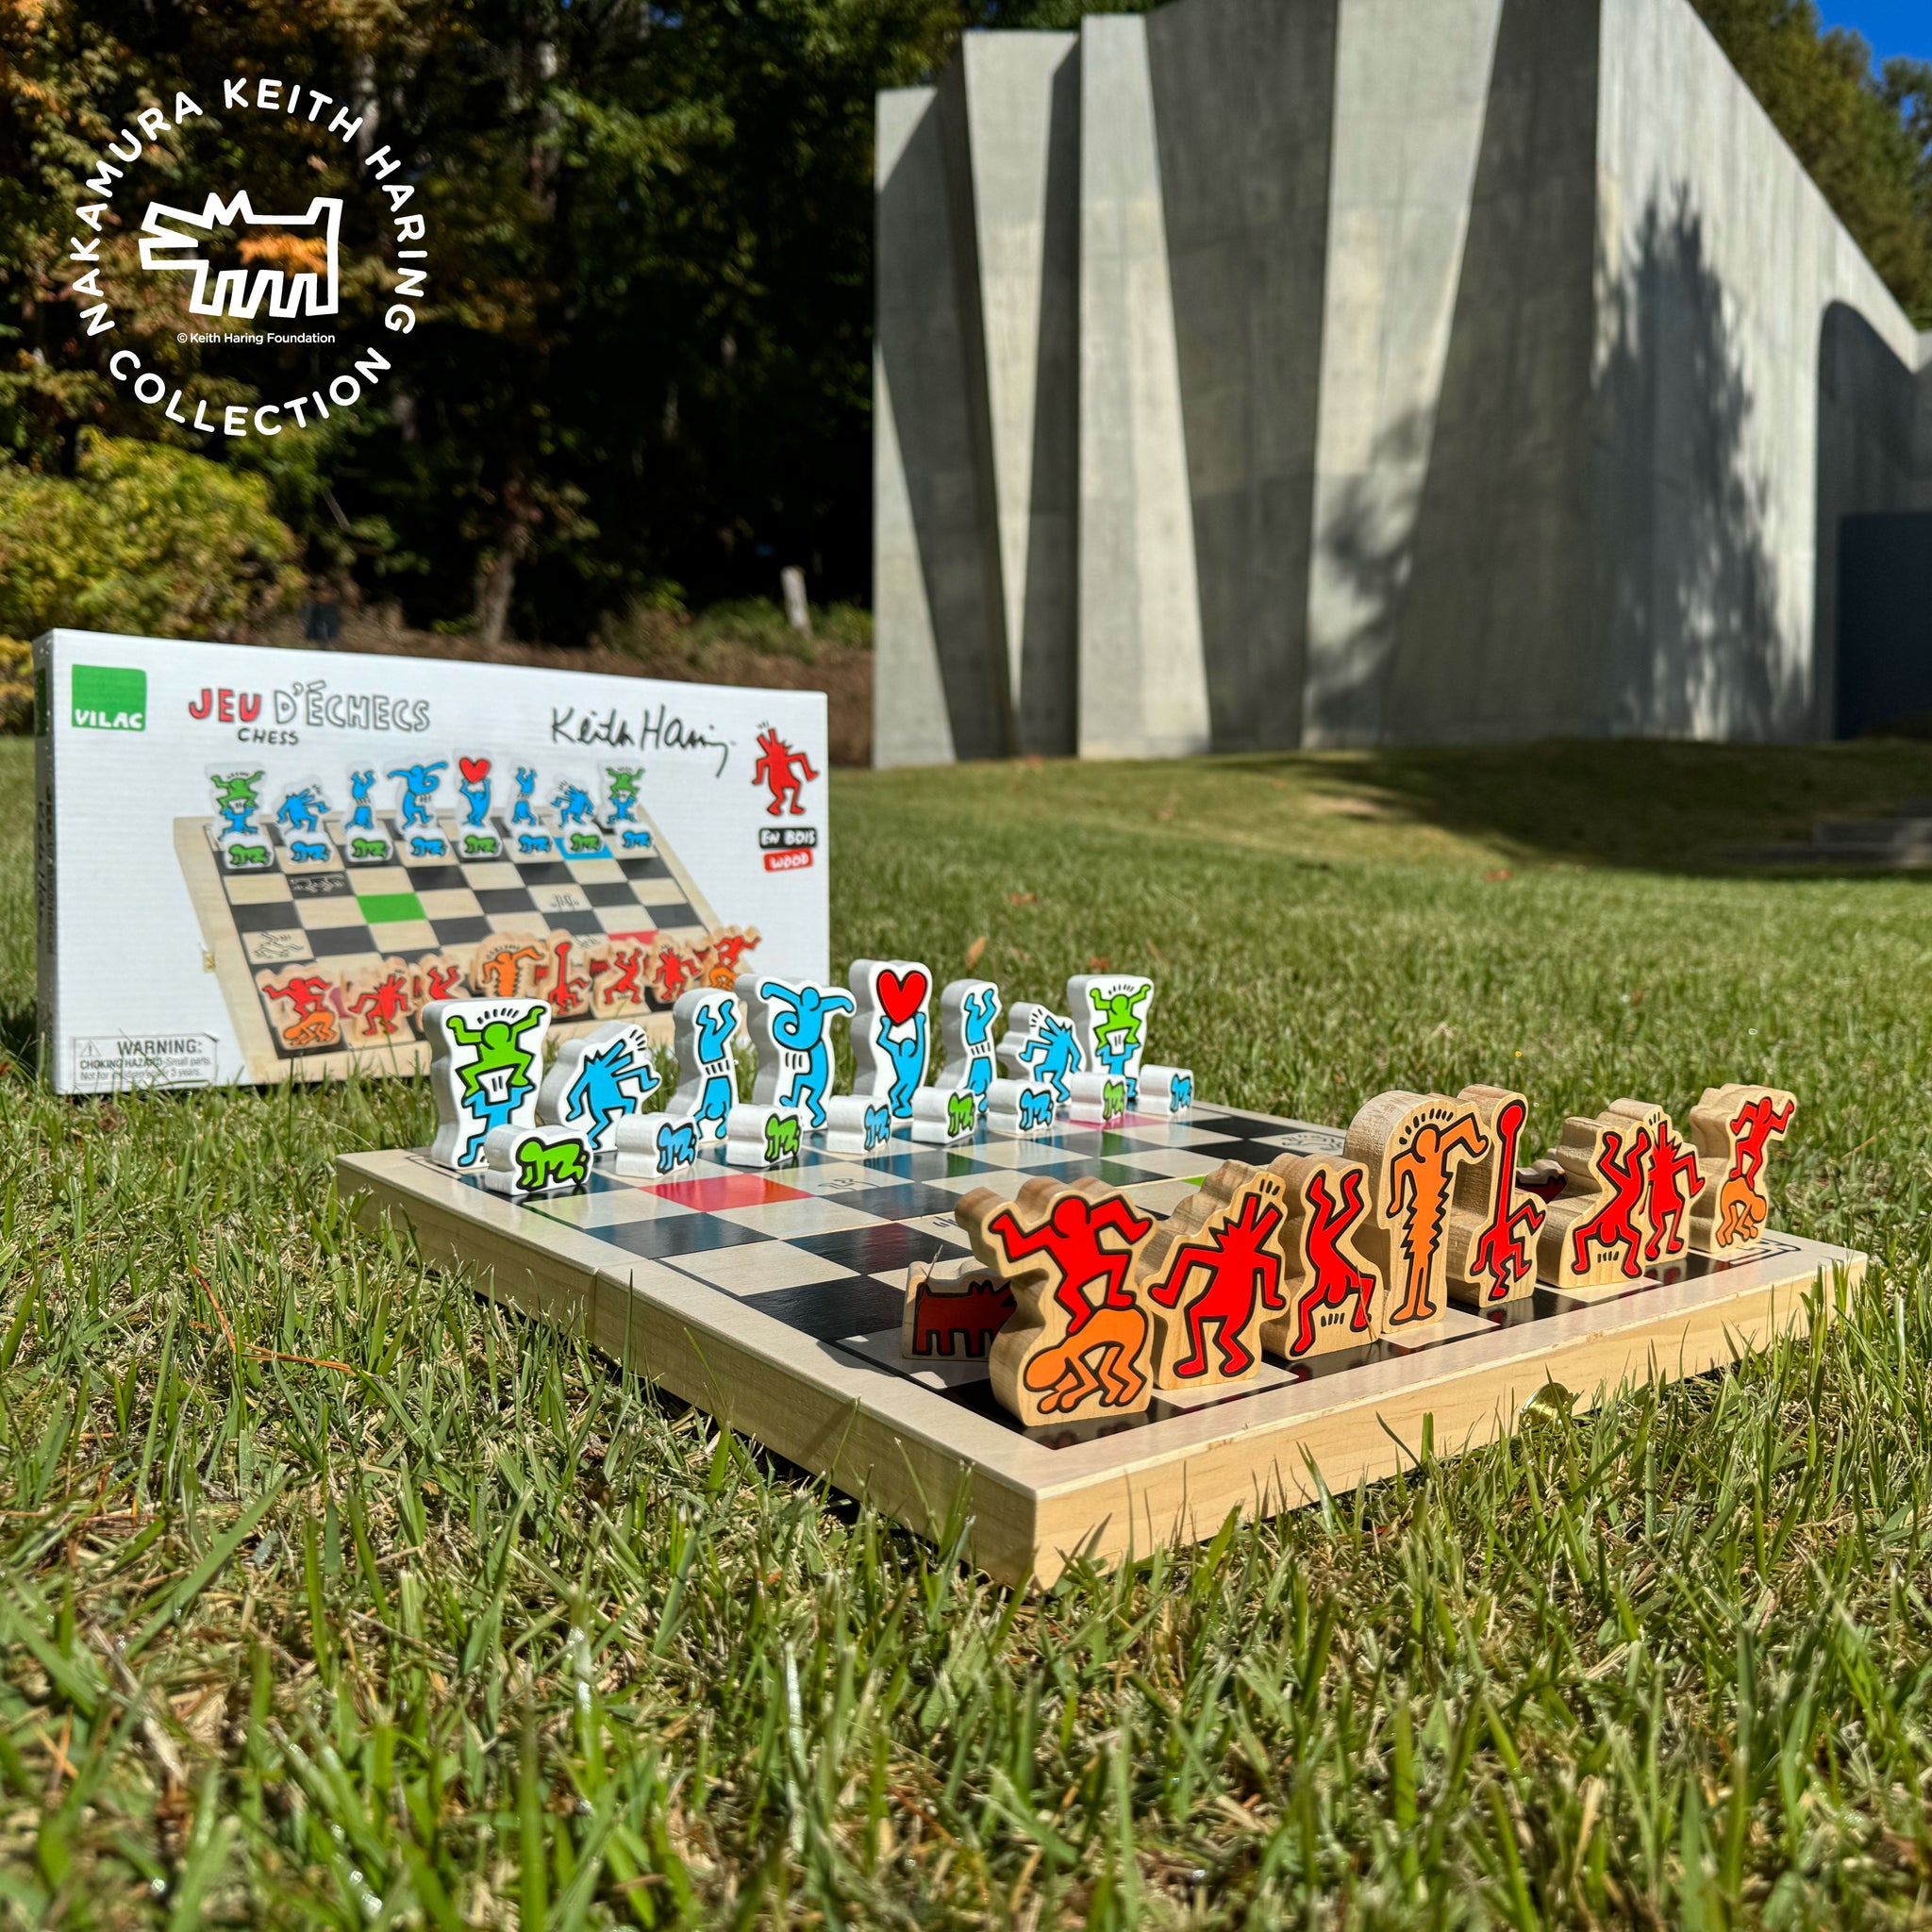 Checkers / Backgammon game – Nakamura Keith Haring Collection